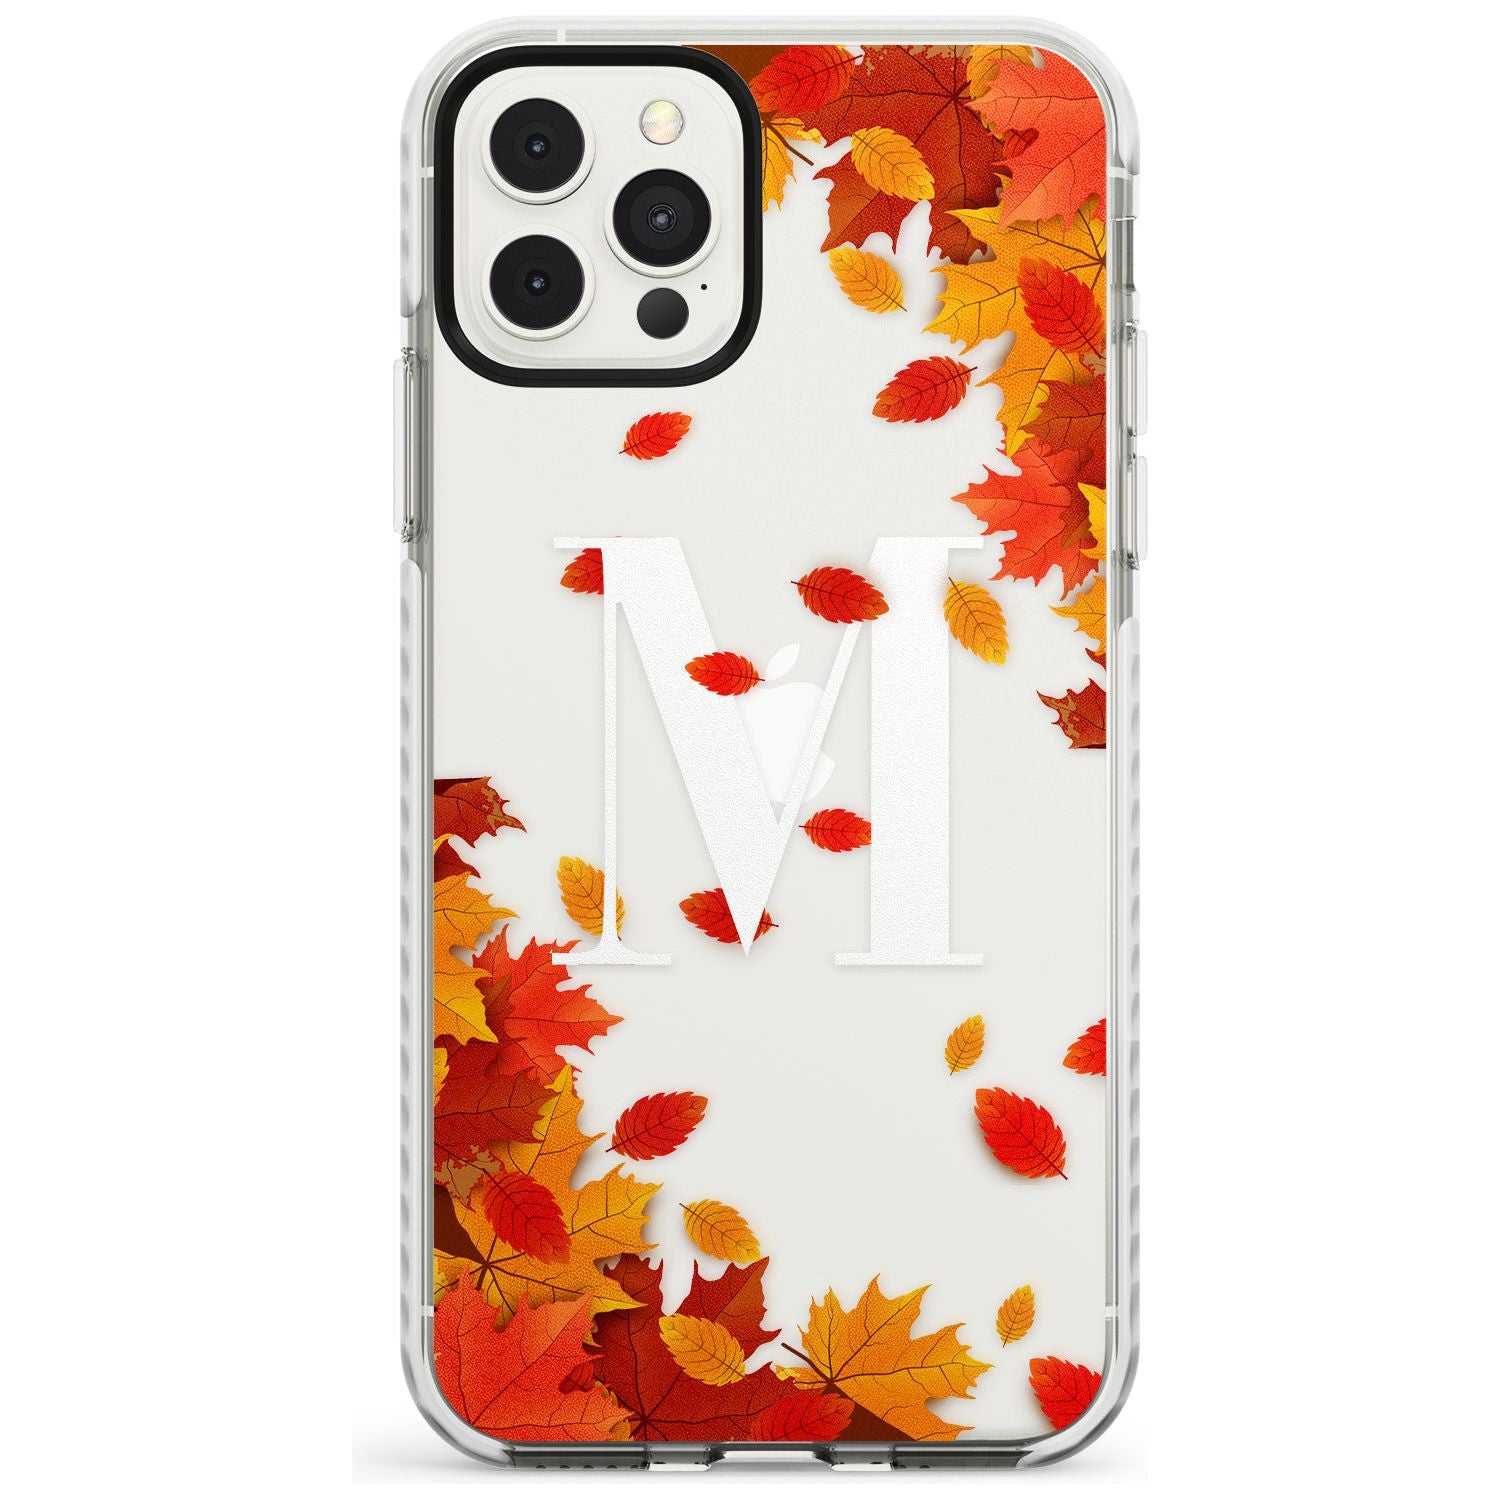 Personalised Monogram Autumn Leaves Impact Phone Case for iPhone 11 Pro Max